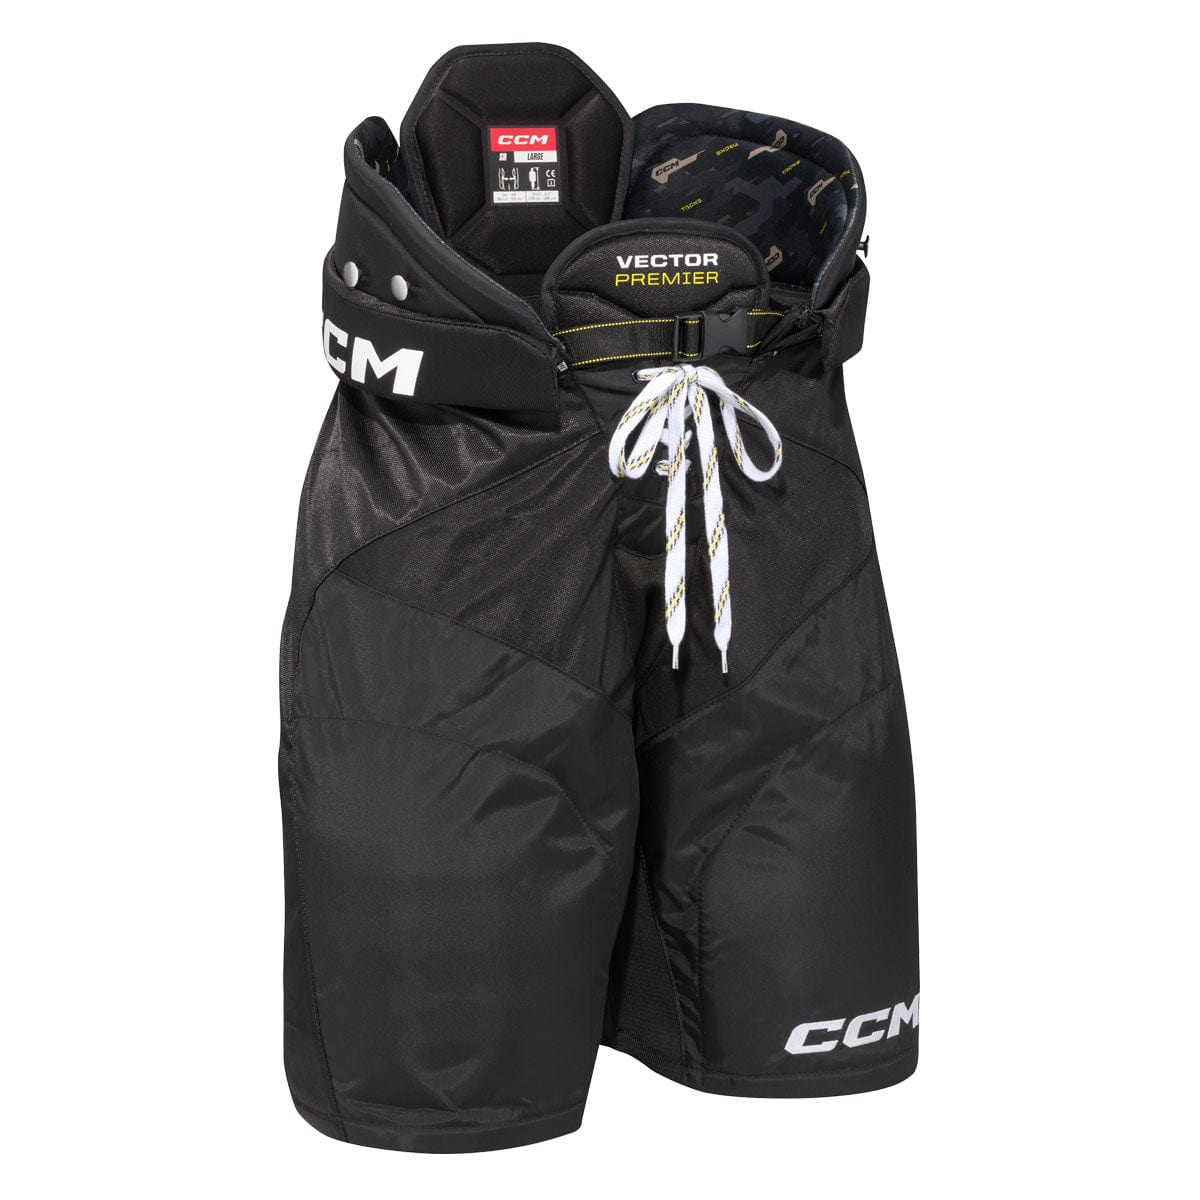 CCM Tacks Vector Premier Junior Hockey Pants - The Hockey Shop Source For Sports